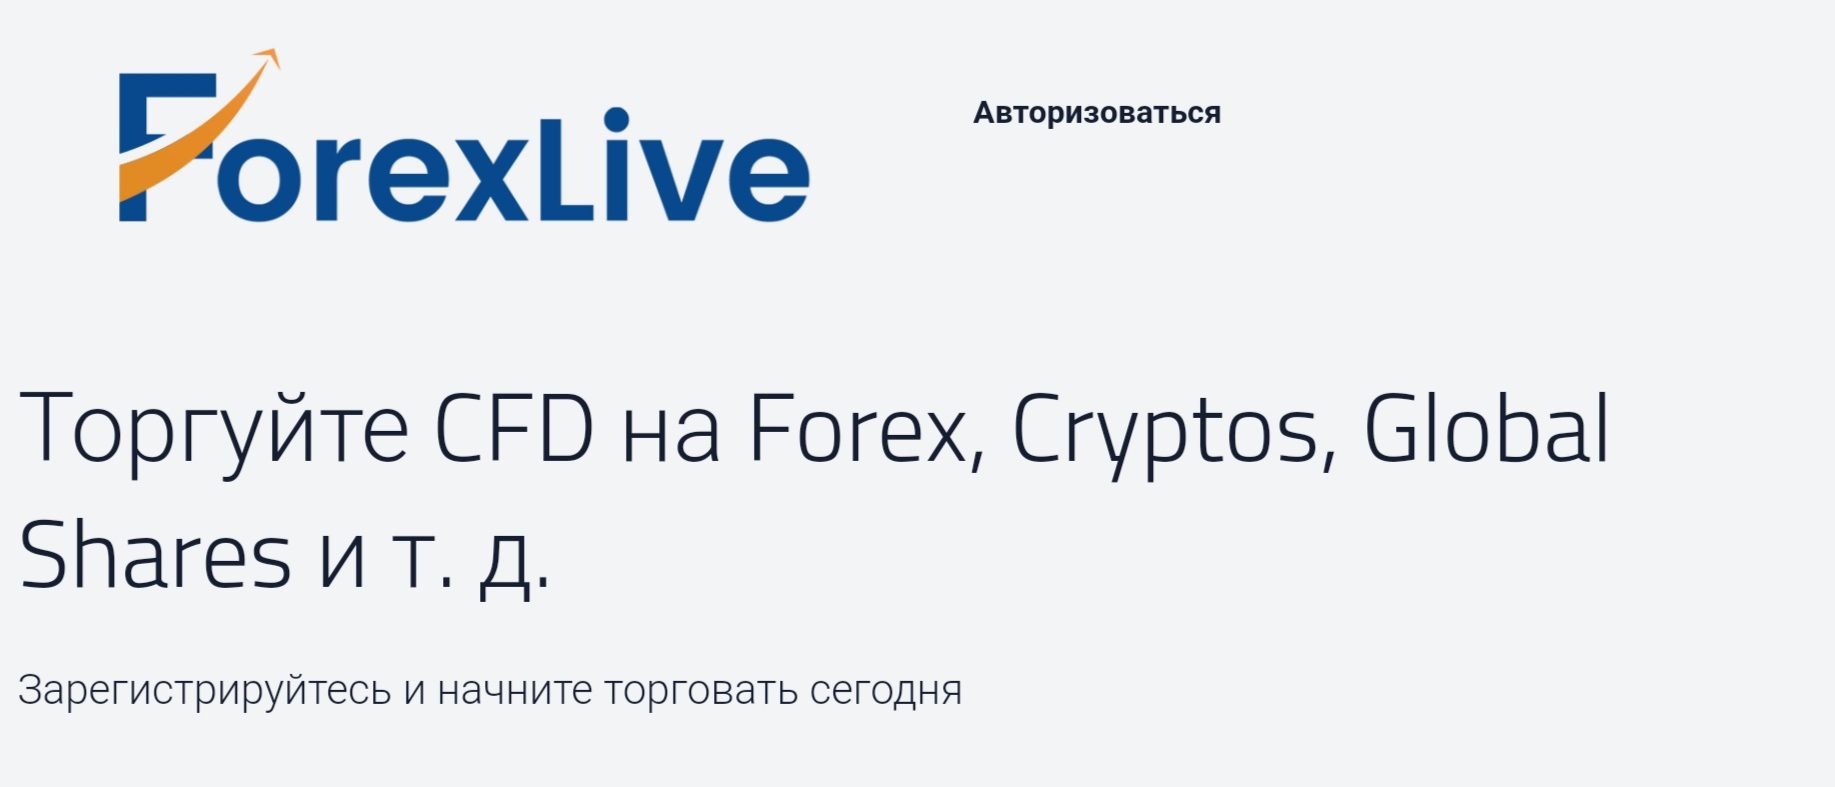 Forex Live сайт